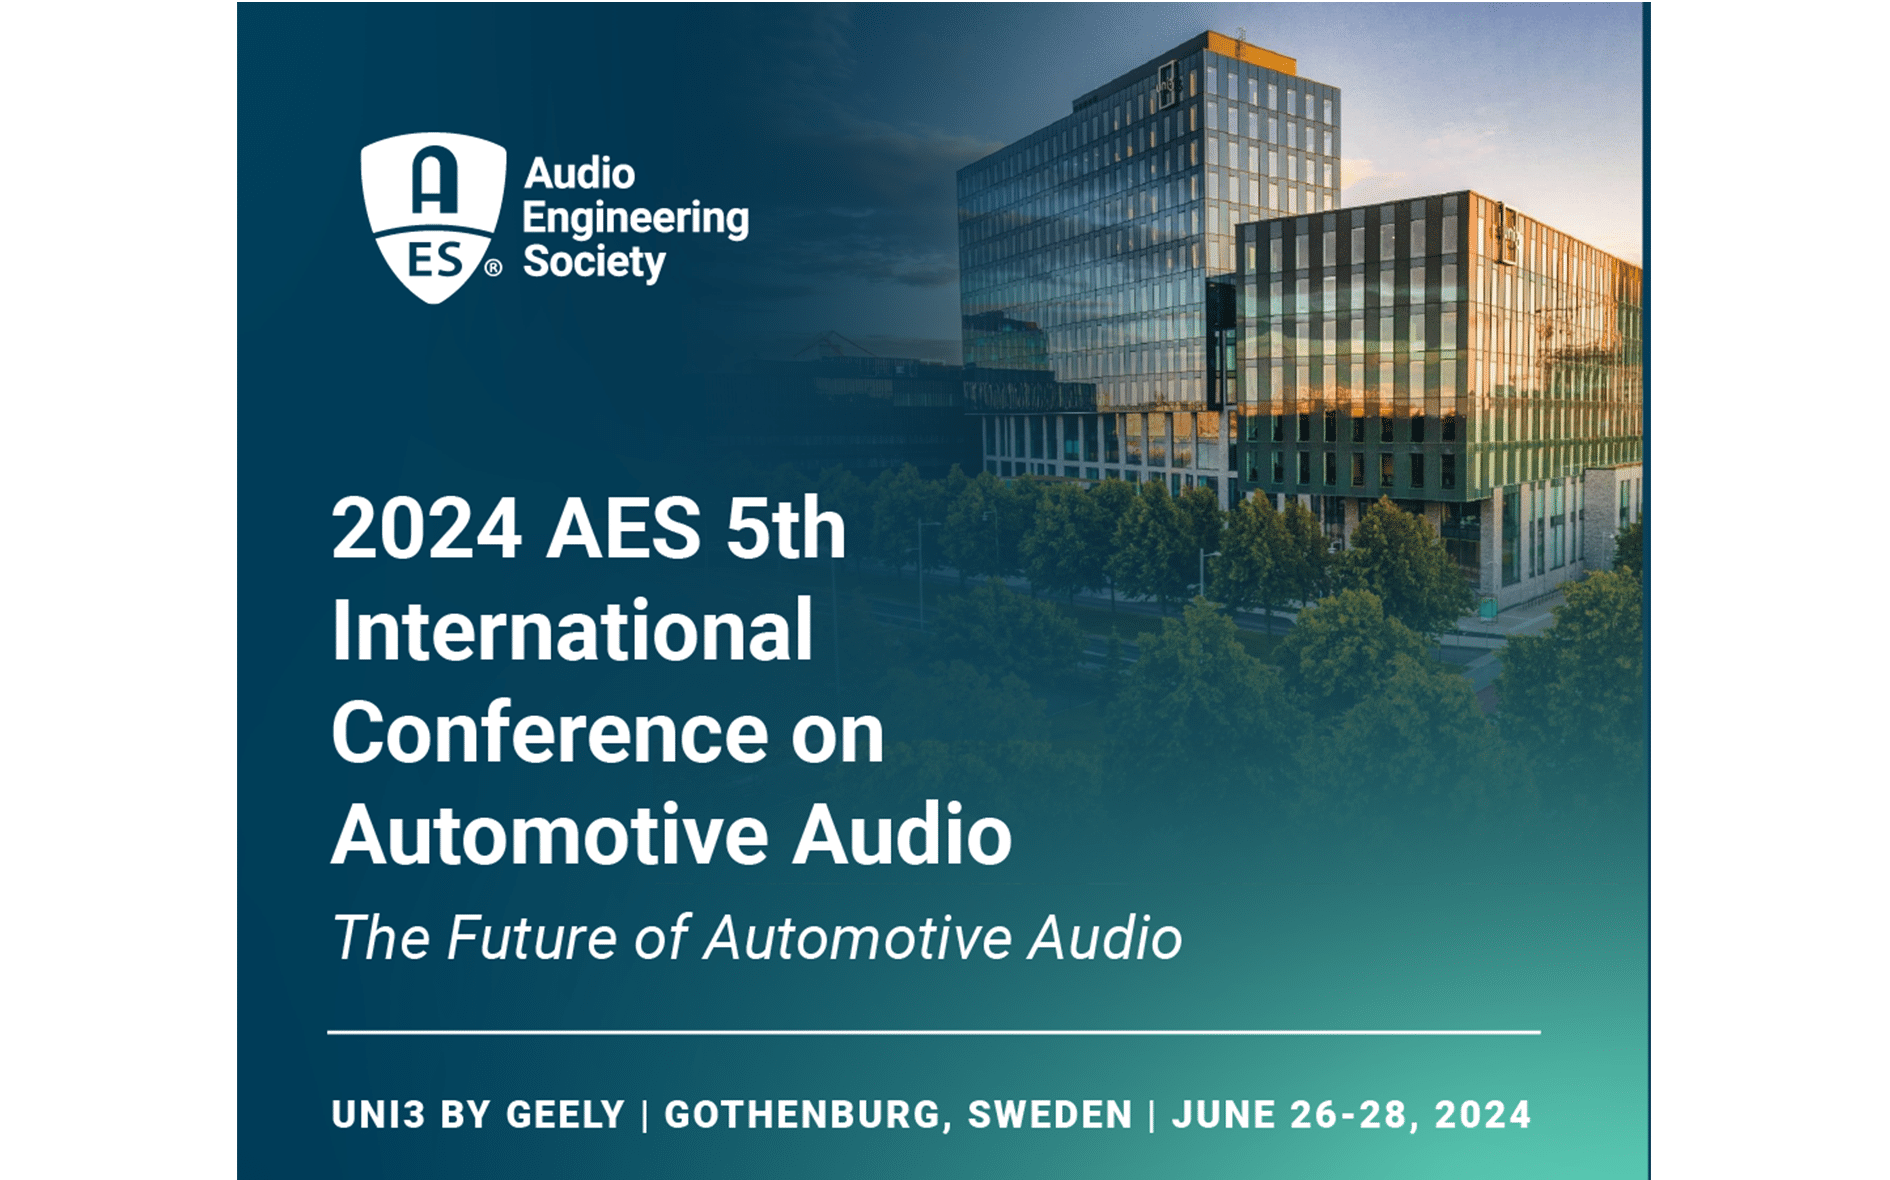 International Automotive Audio Conference at Uni3